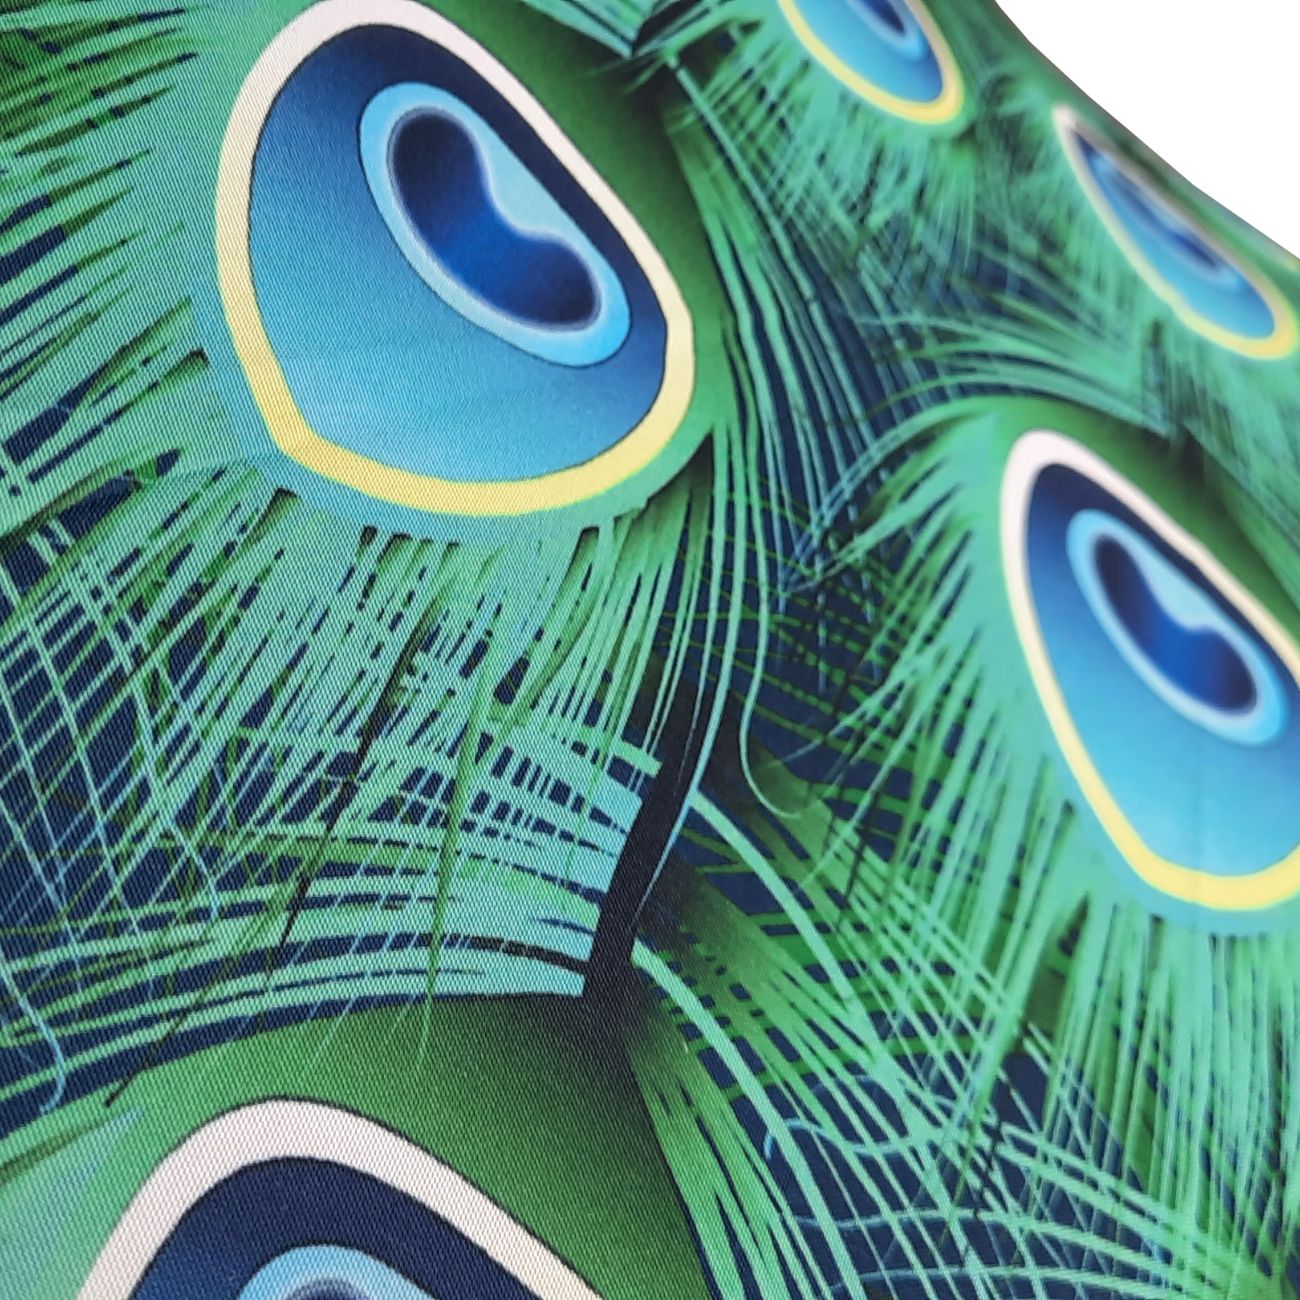 Peacock print umbrella - close-up of fabric